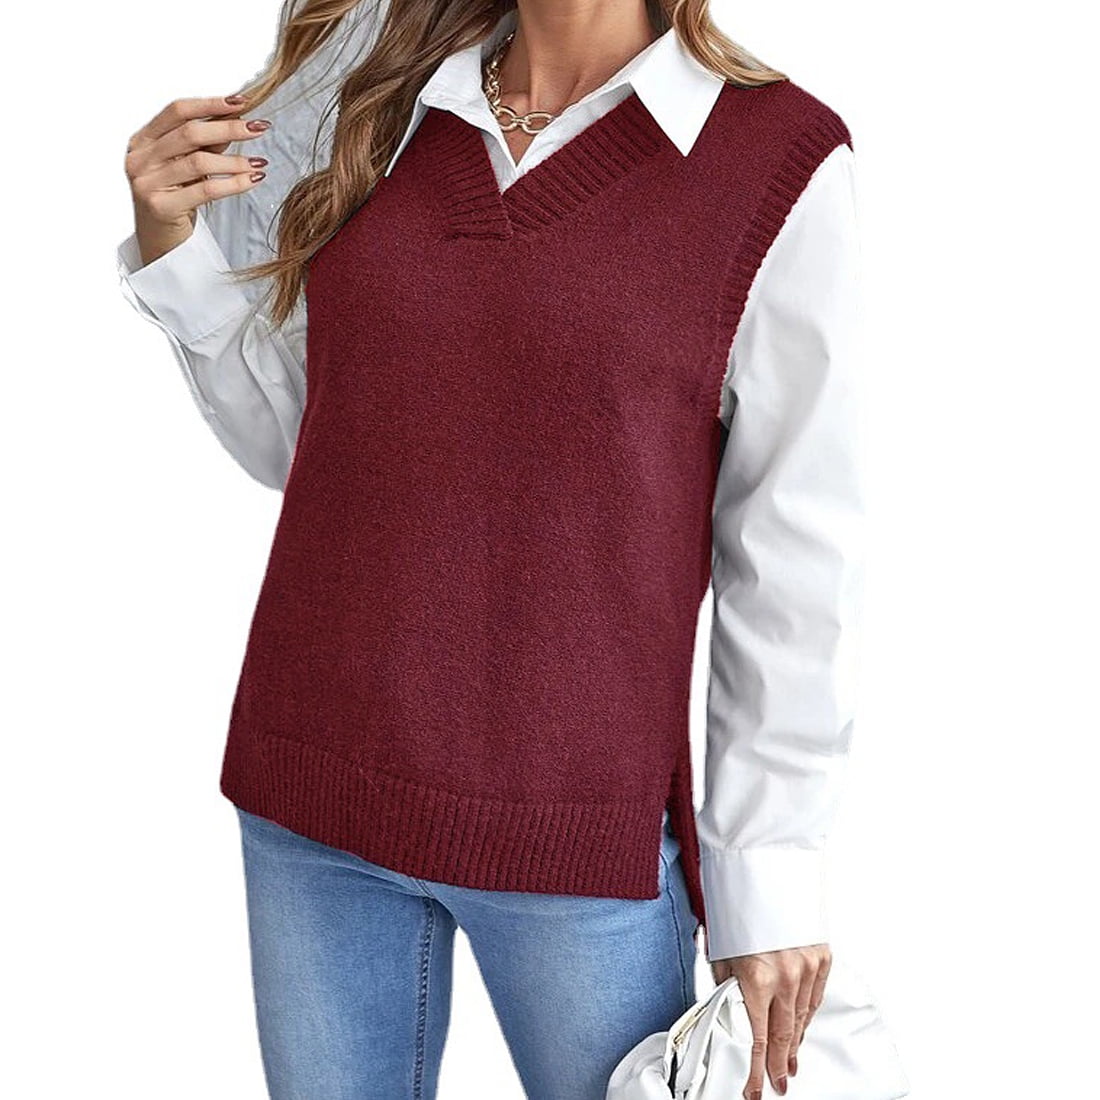 Hanerdun Women Female Solid Knit Sleeveless Pullover Sweater Vest Dark Red  L - Walmart.com